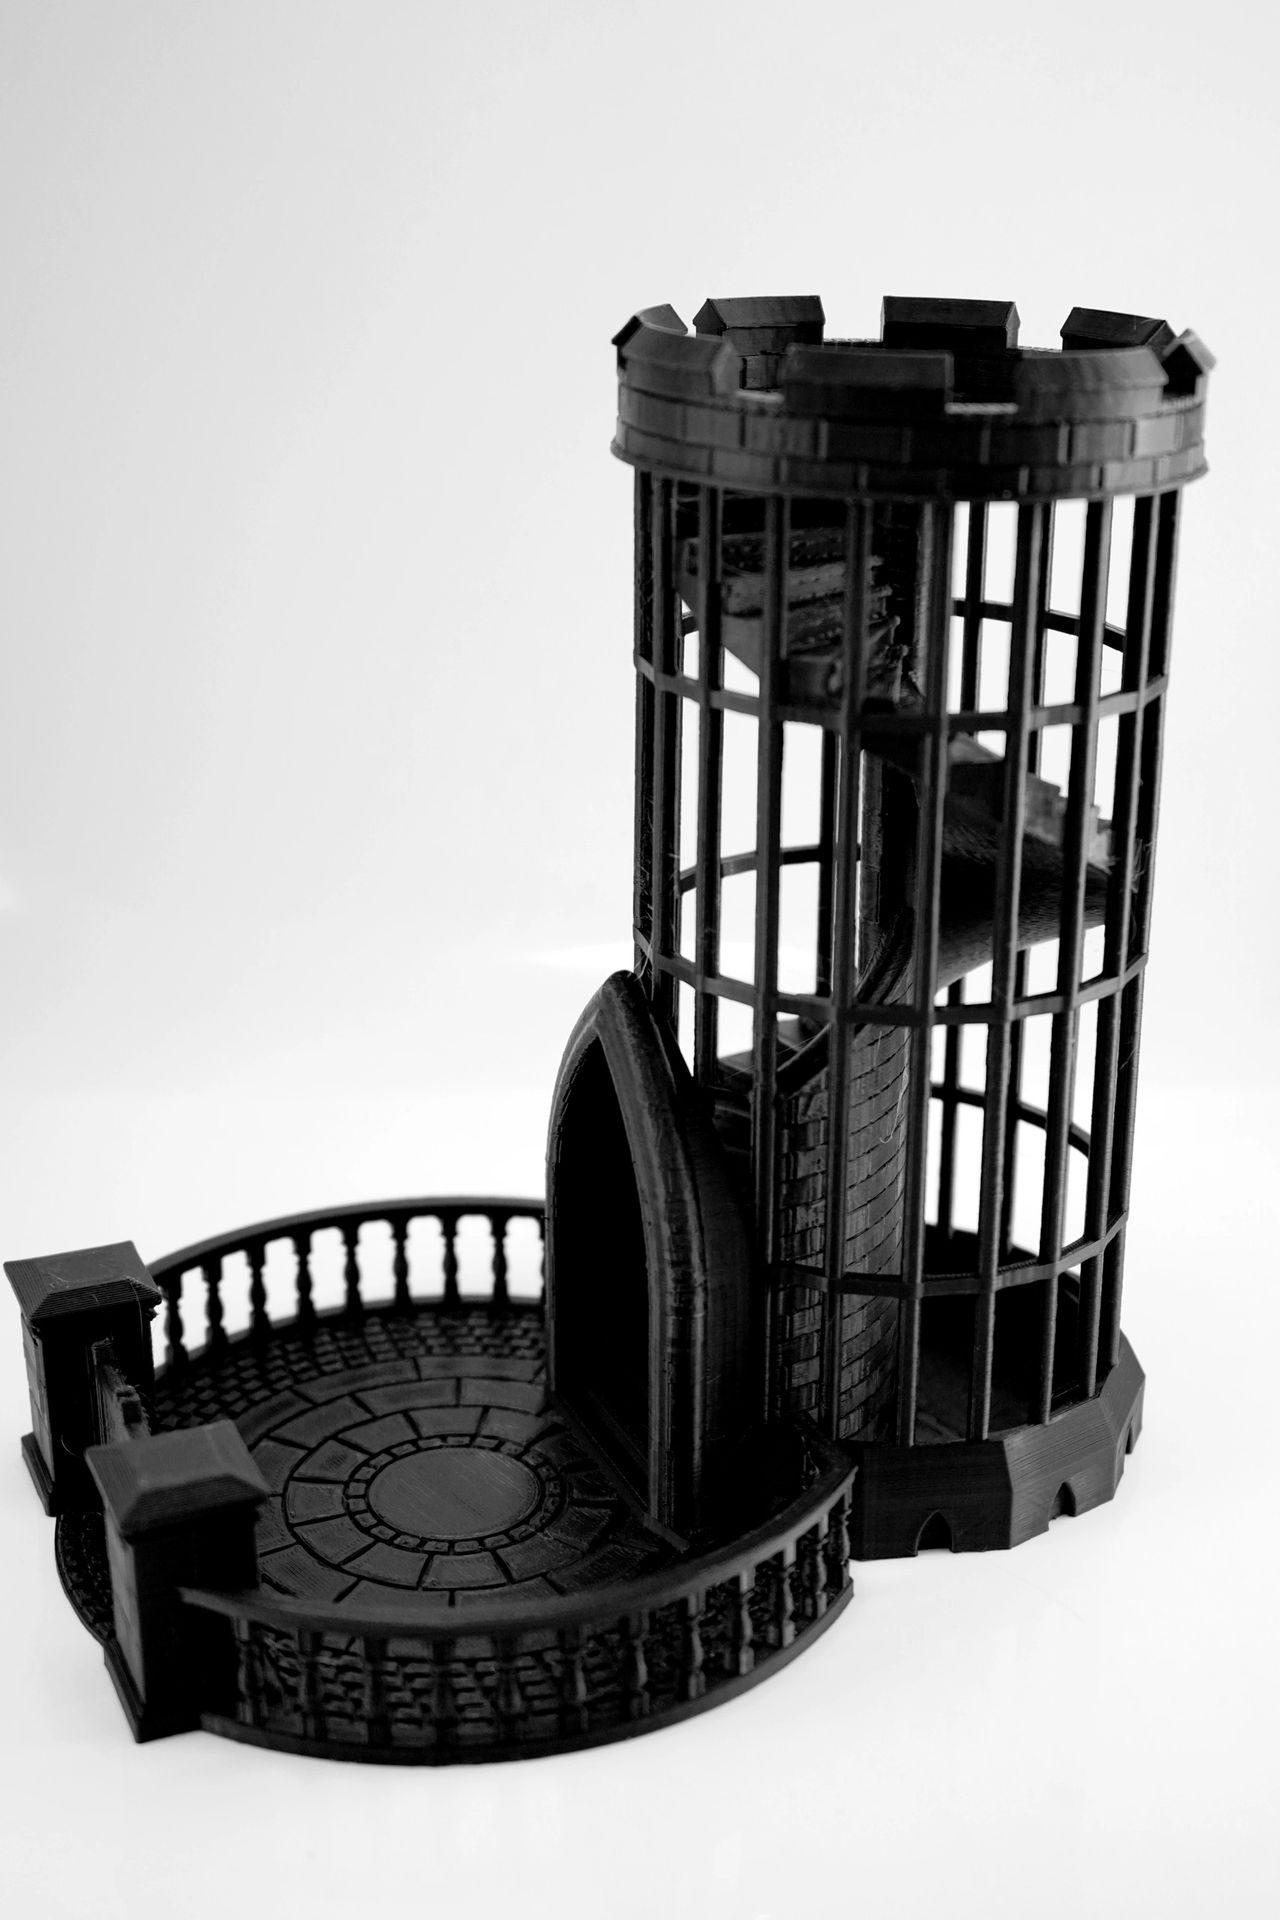 Wilbur's Finest3D Printed Castle Dice Tower